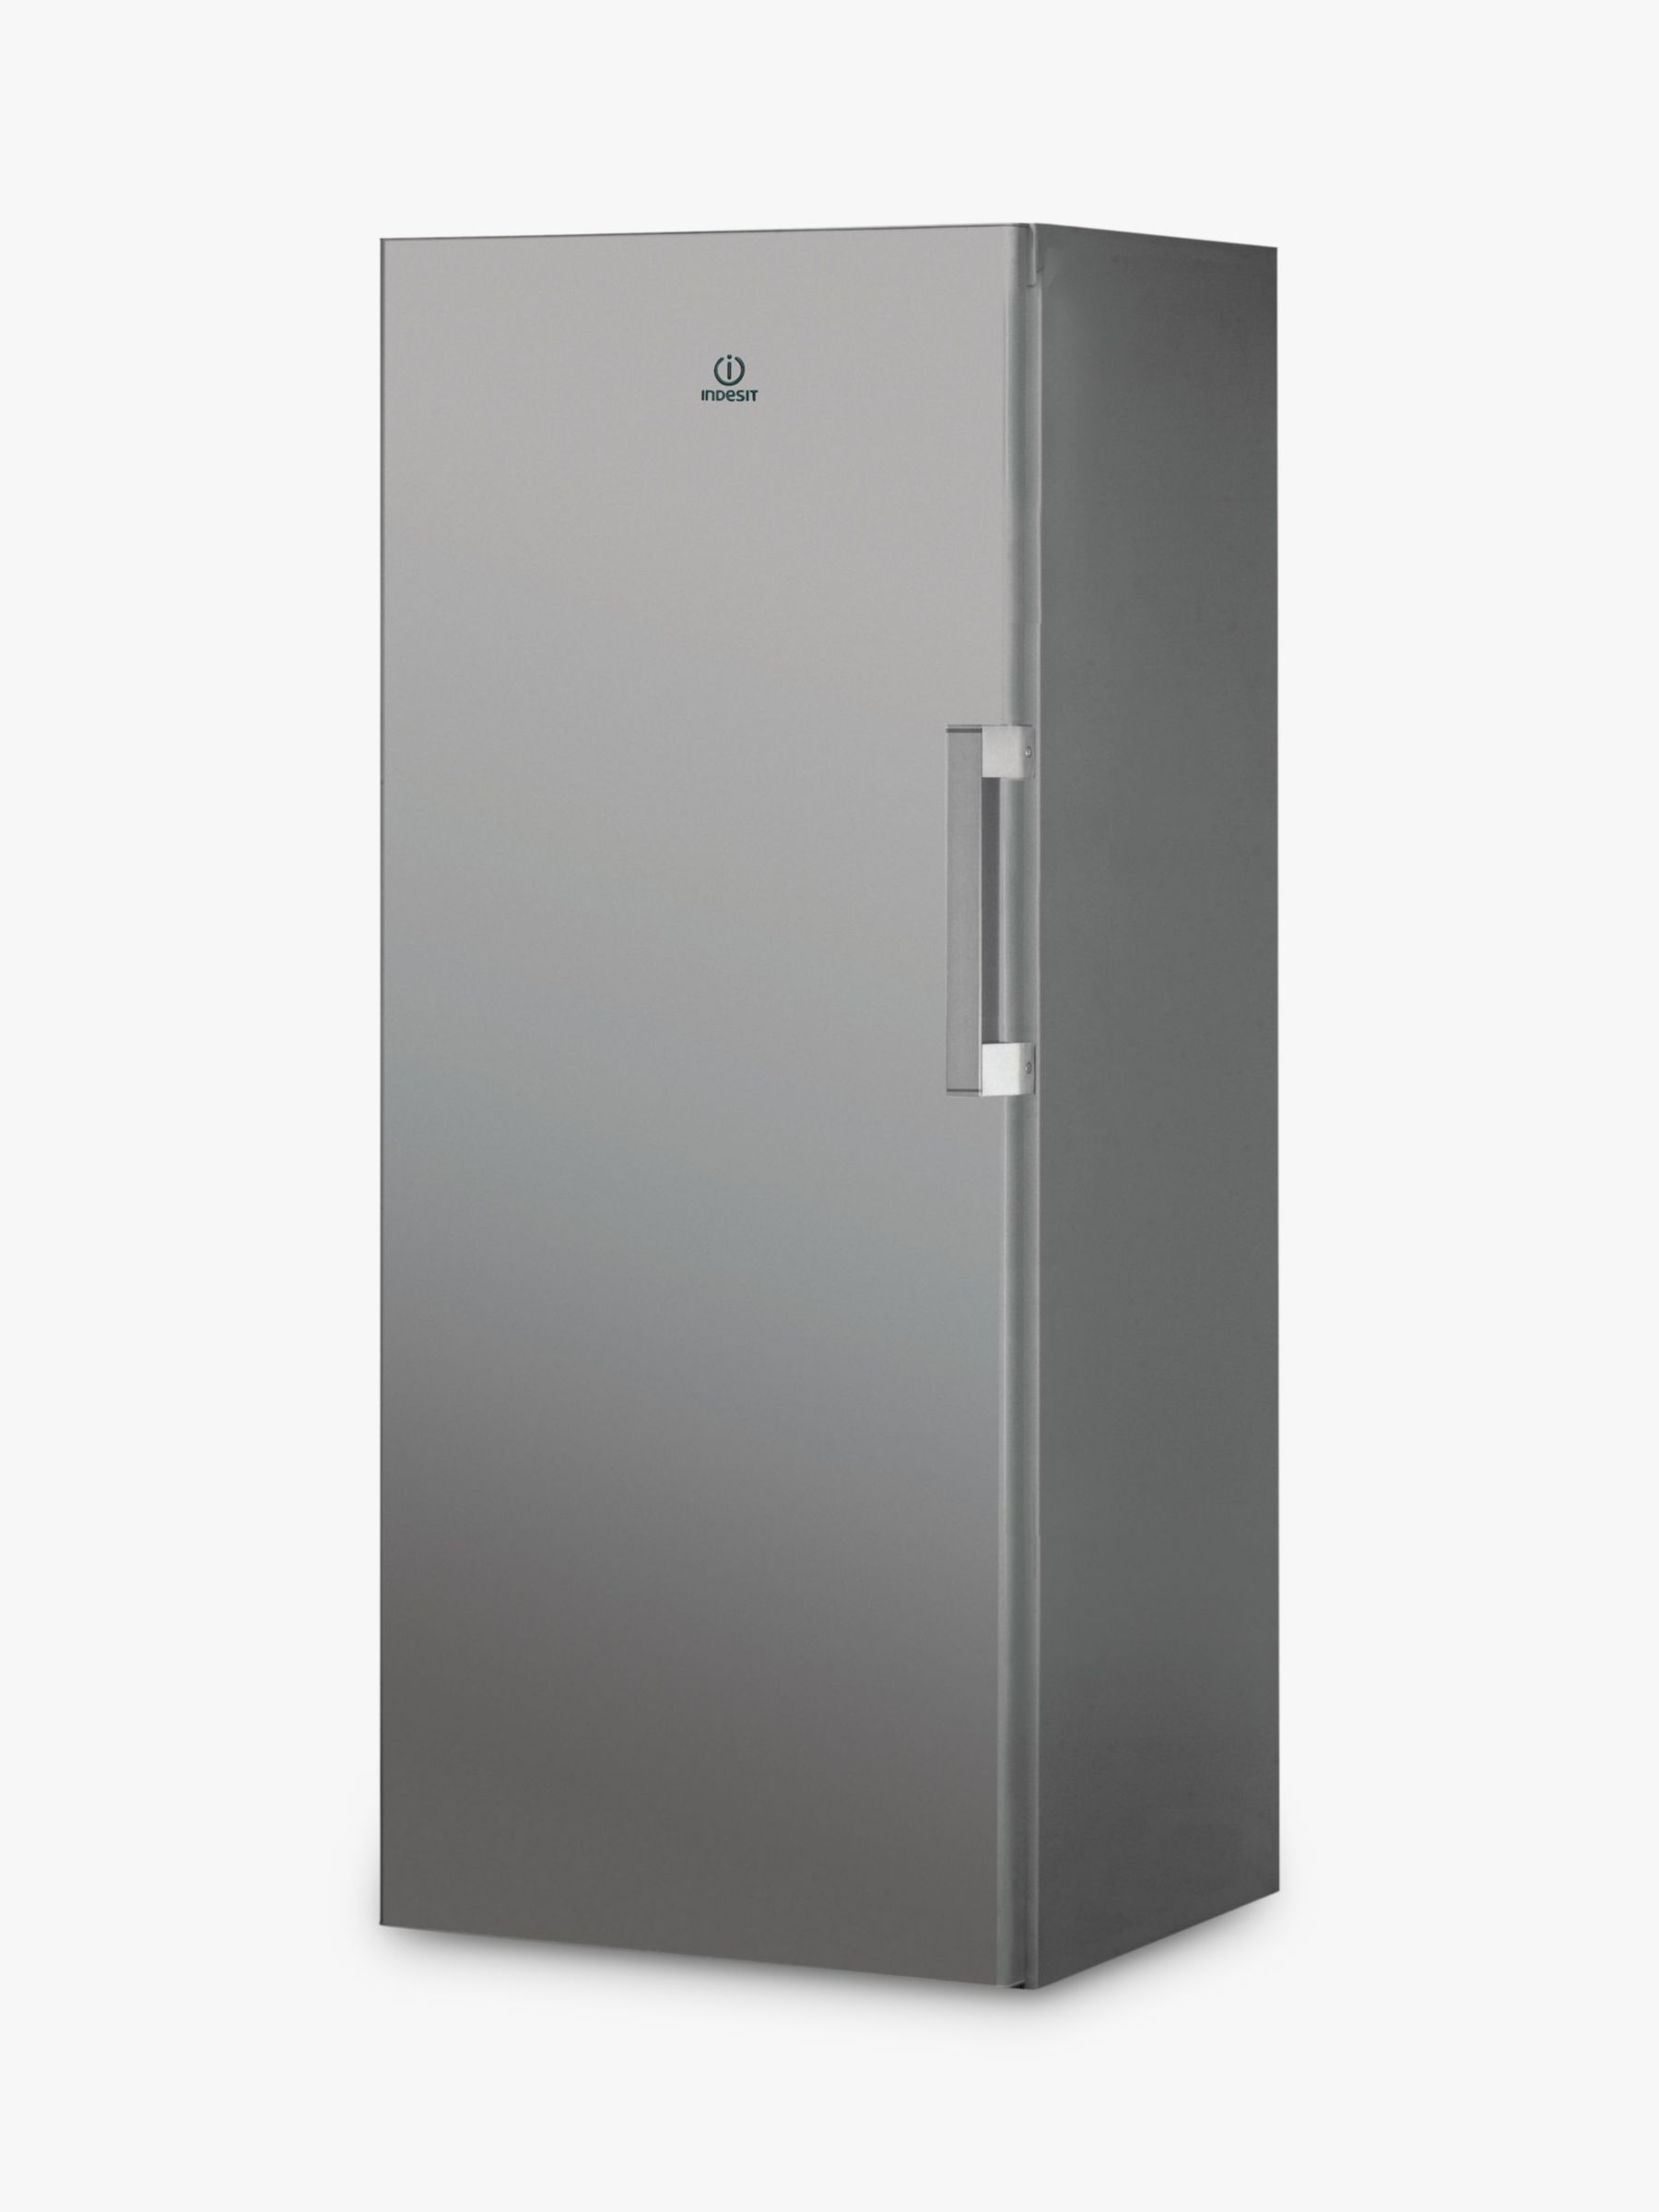 Indesit UI4SUK.1.1 Freestanding Freezer, A+ Energy Rating, 59.5cm Wide, Graphite